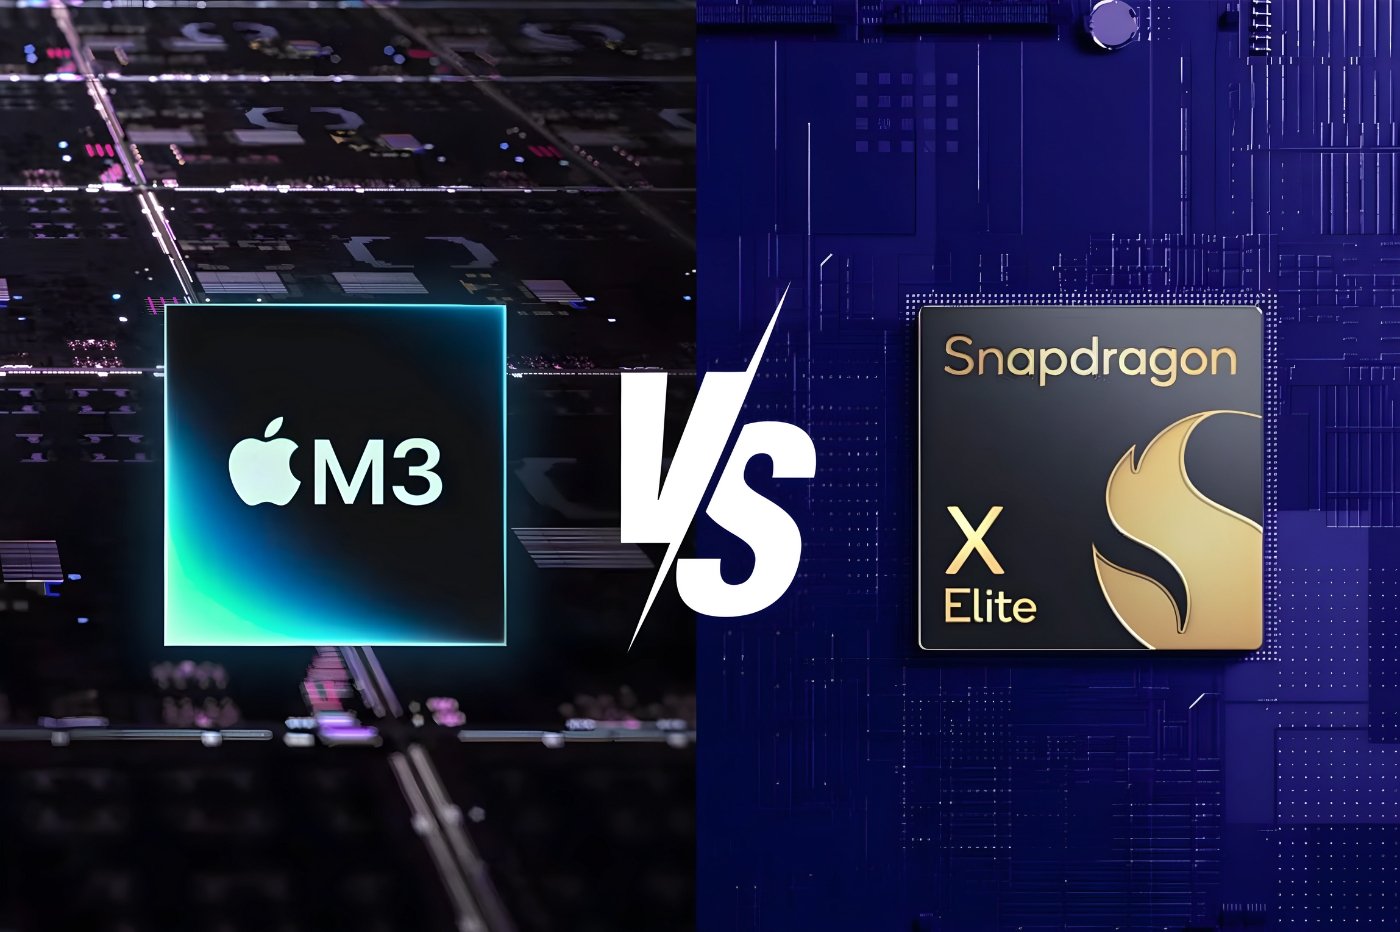 Apple silicon M3 vs qualcomm snapdragon x elite